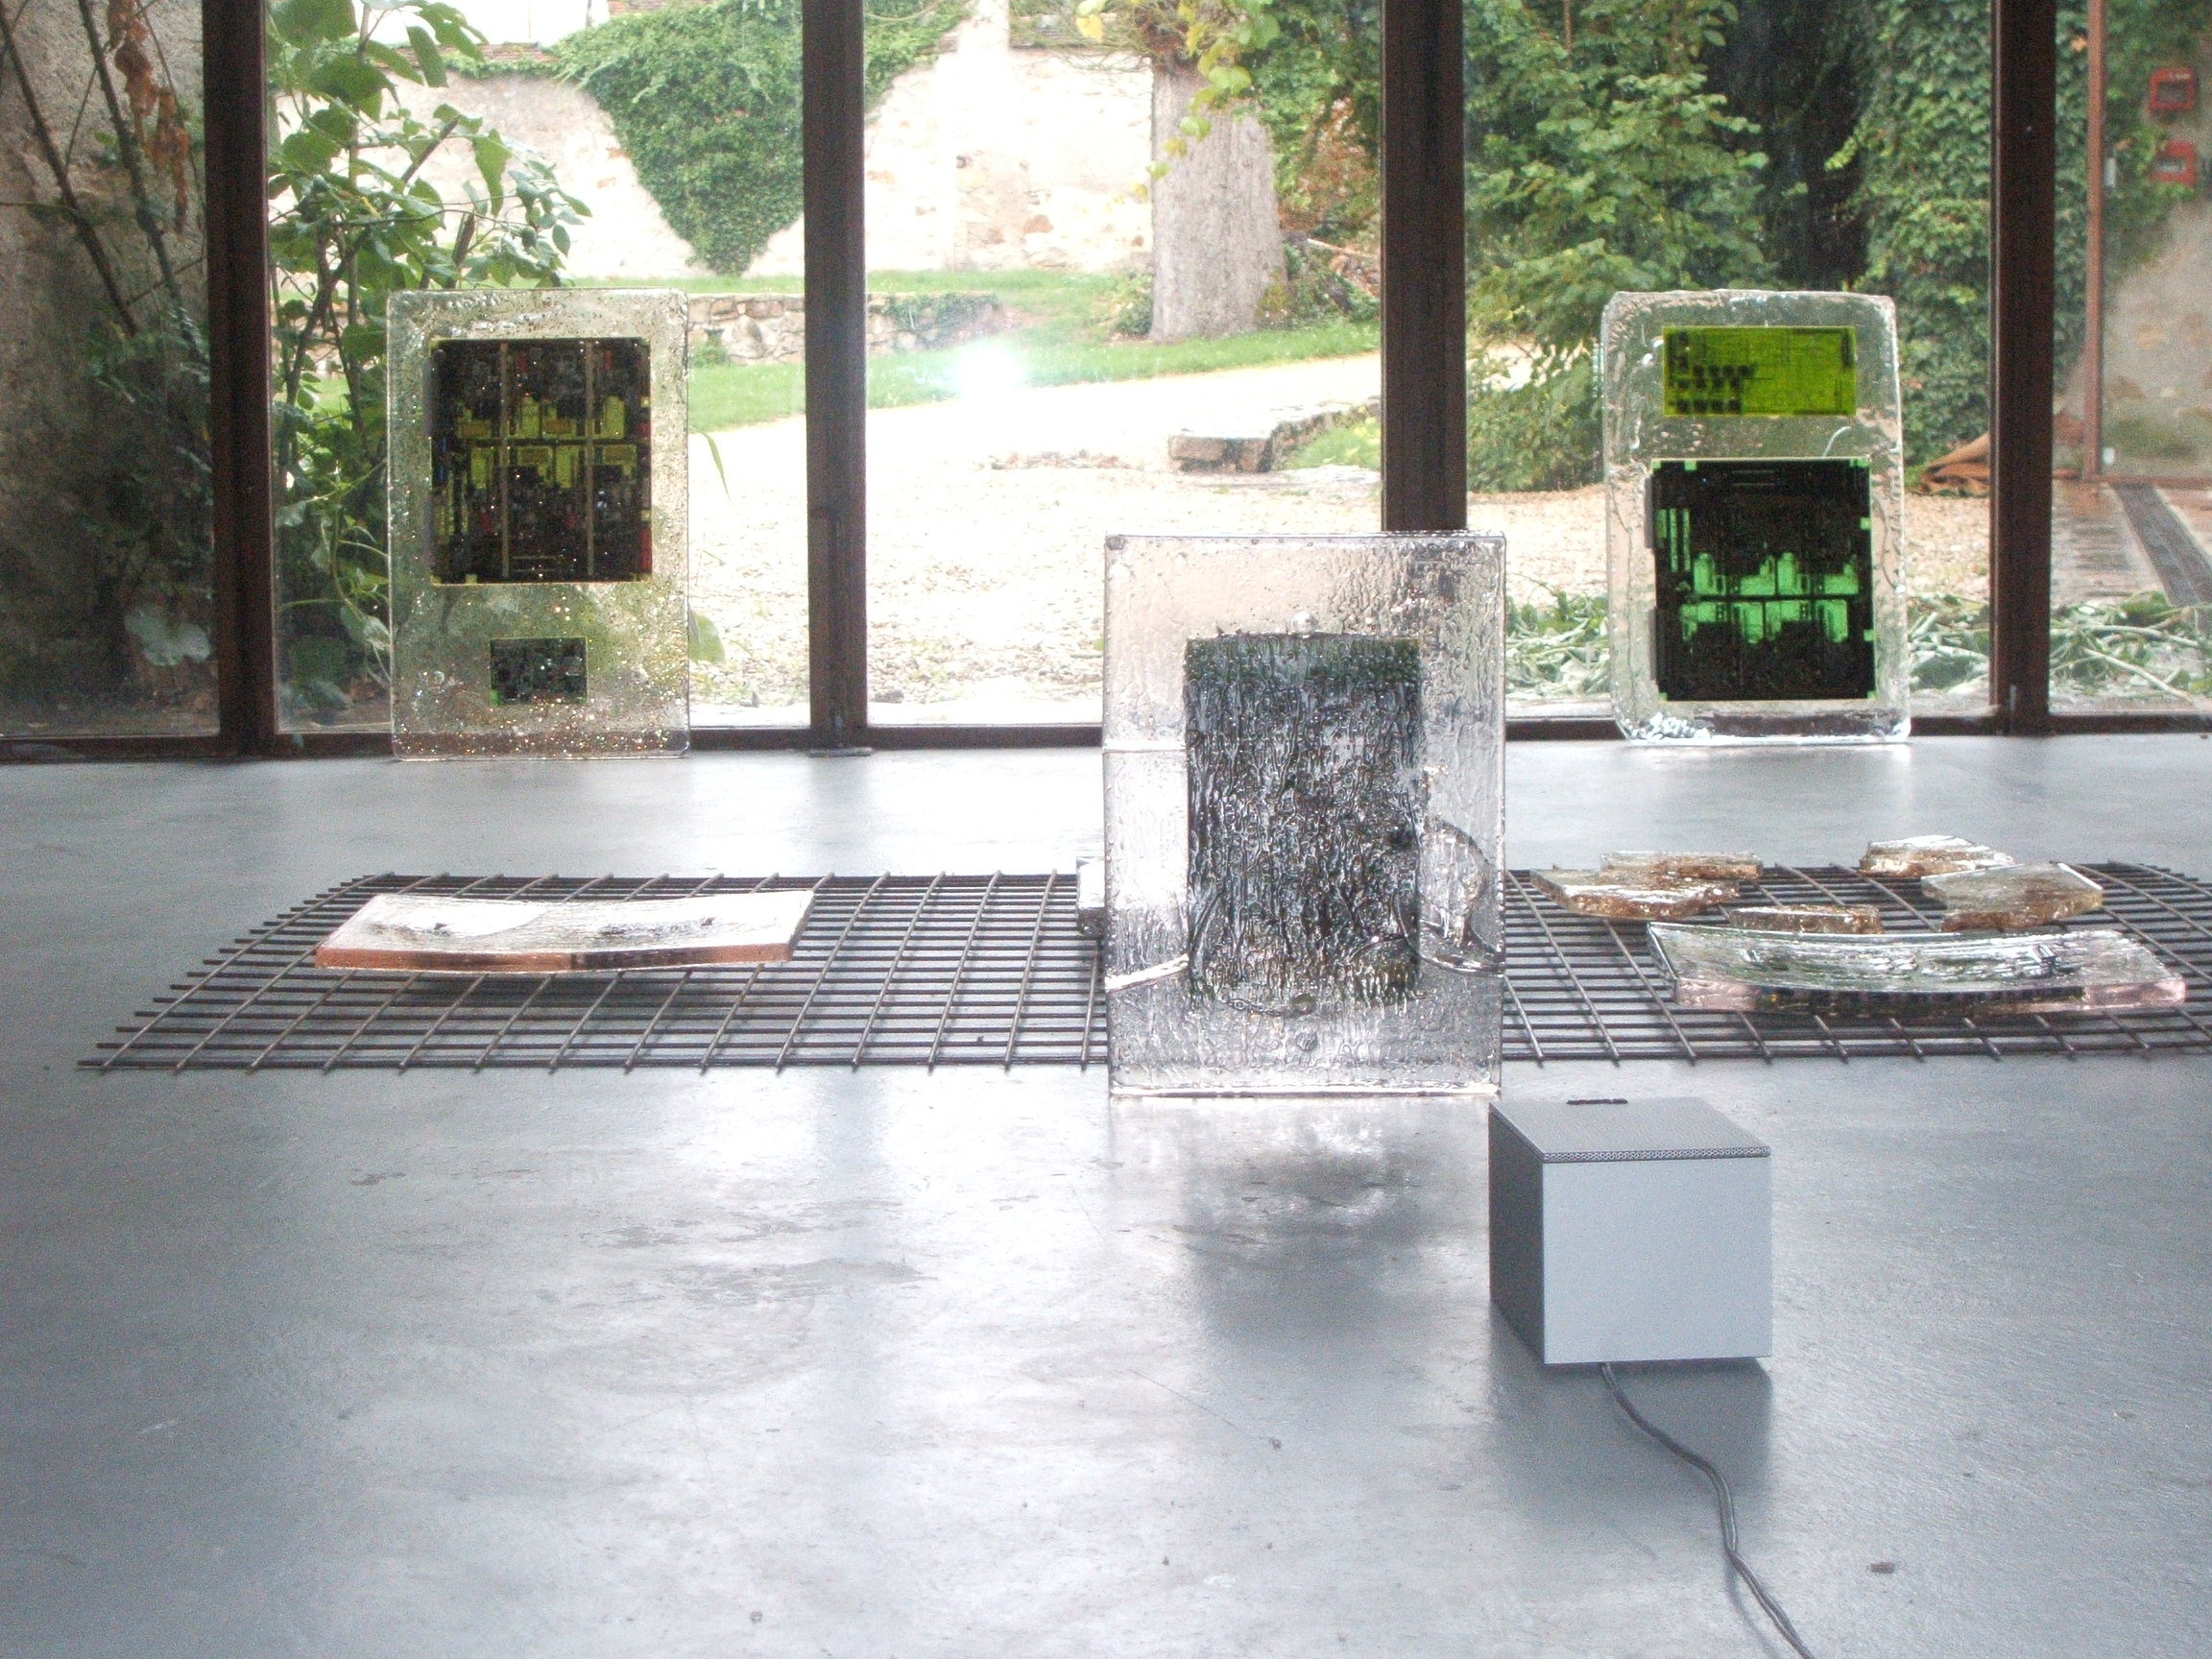 Gallery Camac - Residency and Exhibition, Electro Camac, ‘Digitalis’, France 2006